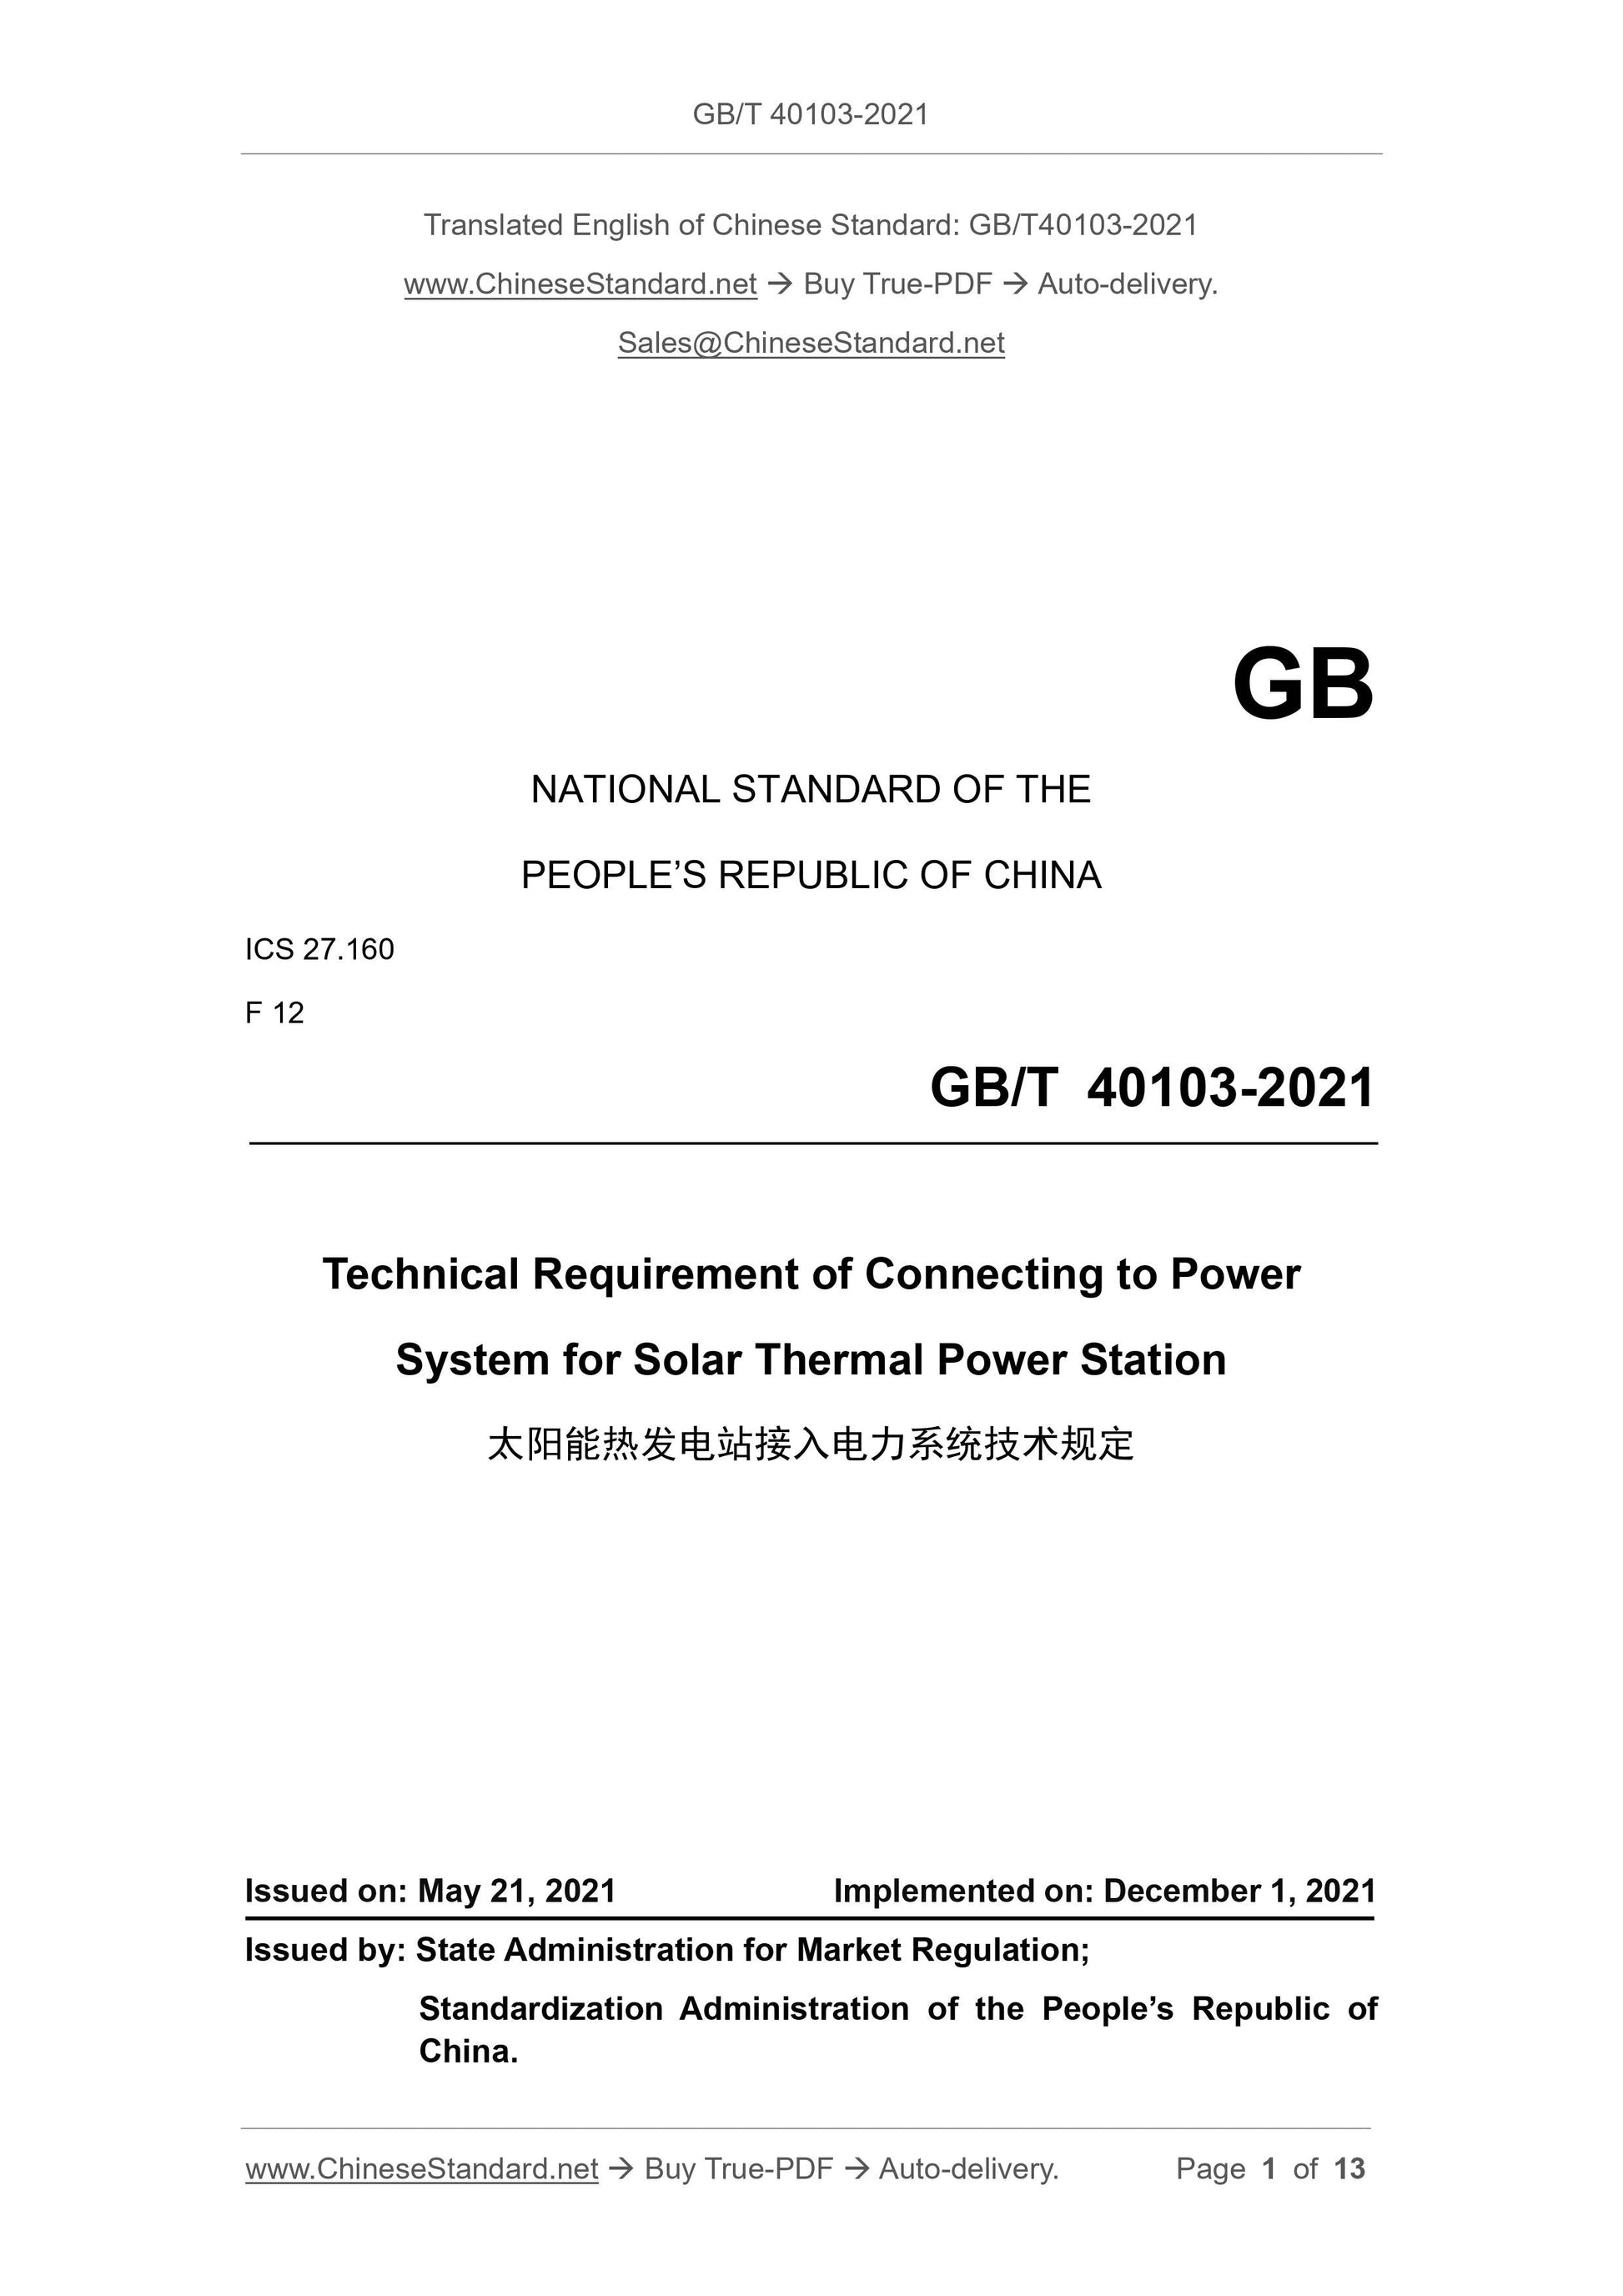 GBT40103-2021 Page 1